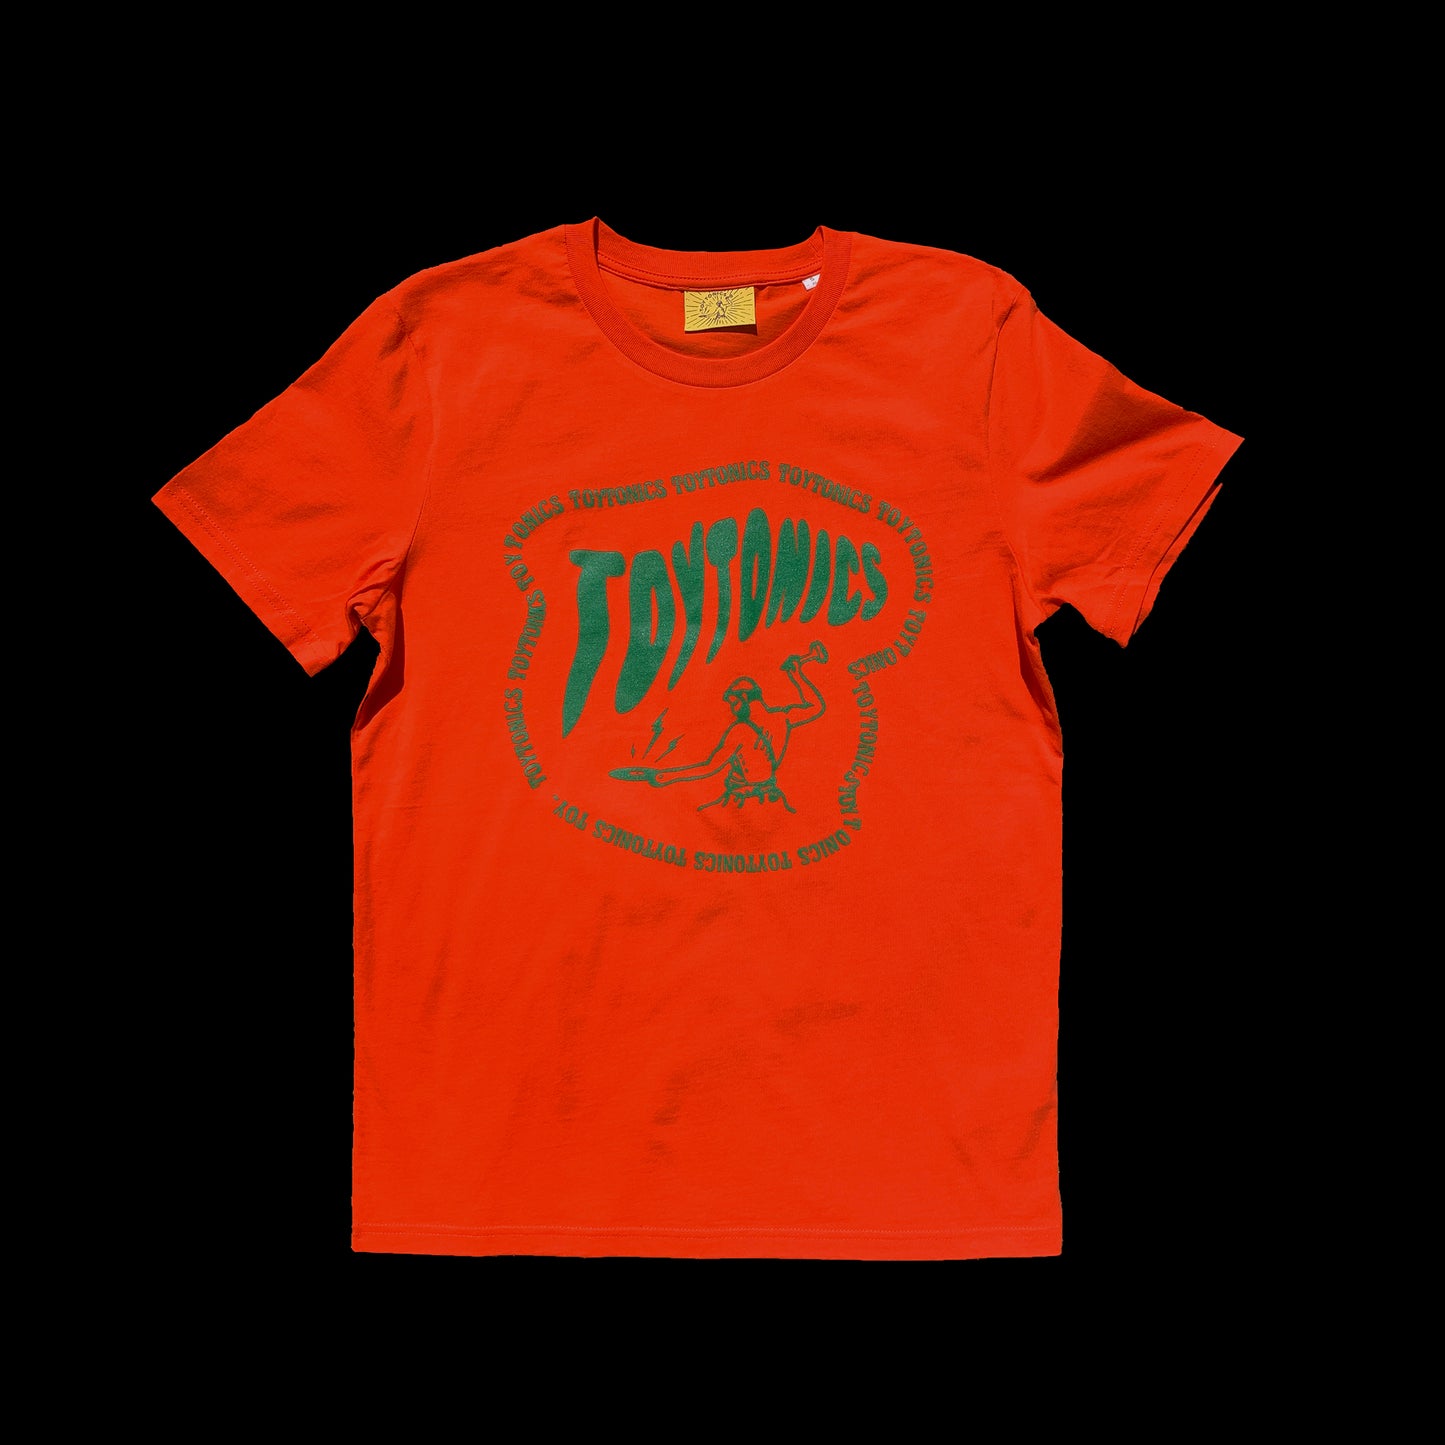 Wobble shirt orange – Limited to 150